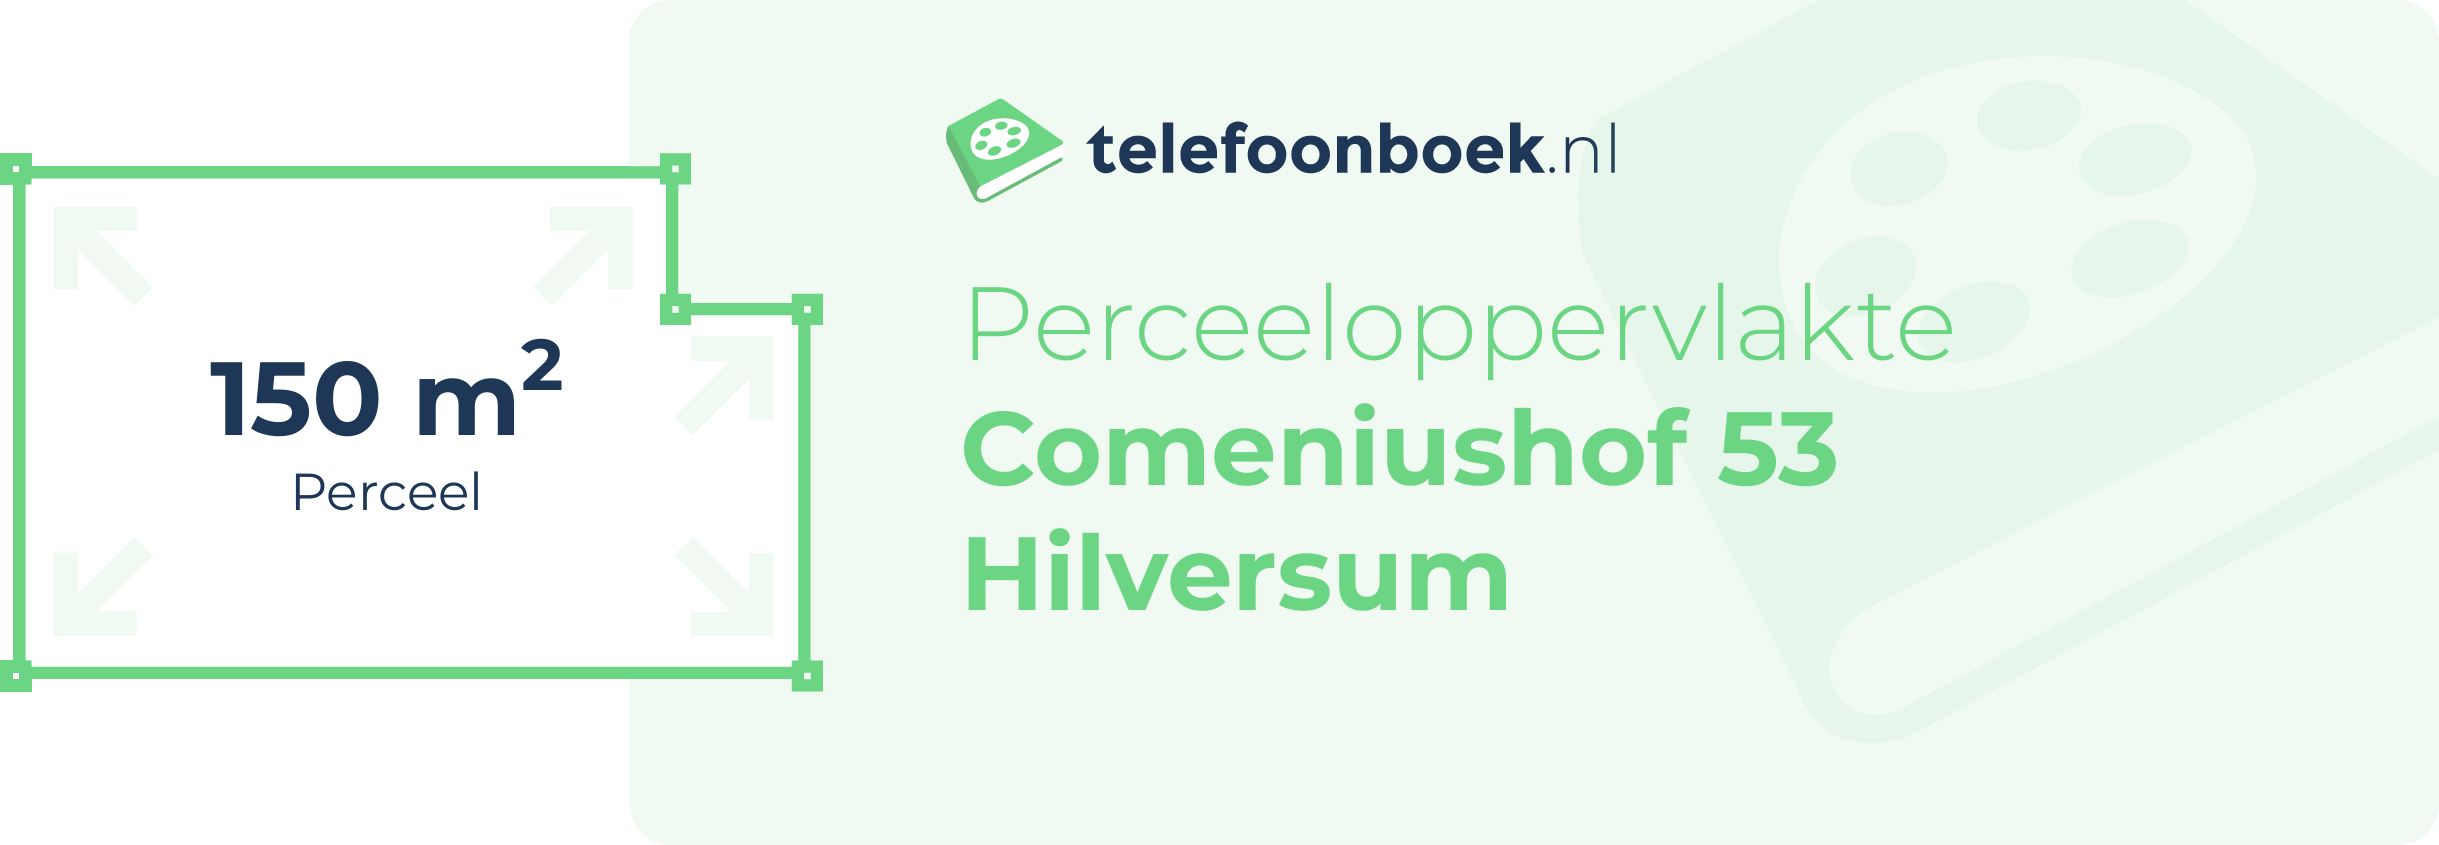 Perceeloppervlakte Comeniushof 53 Hilversum